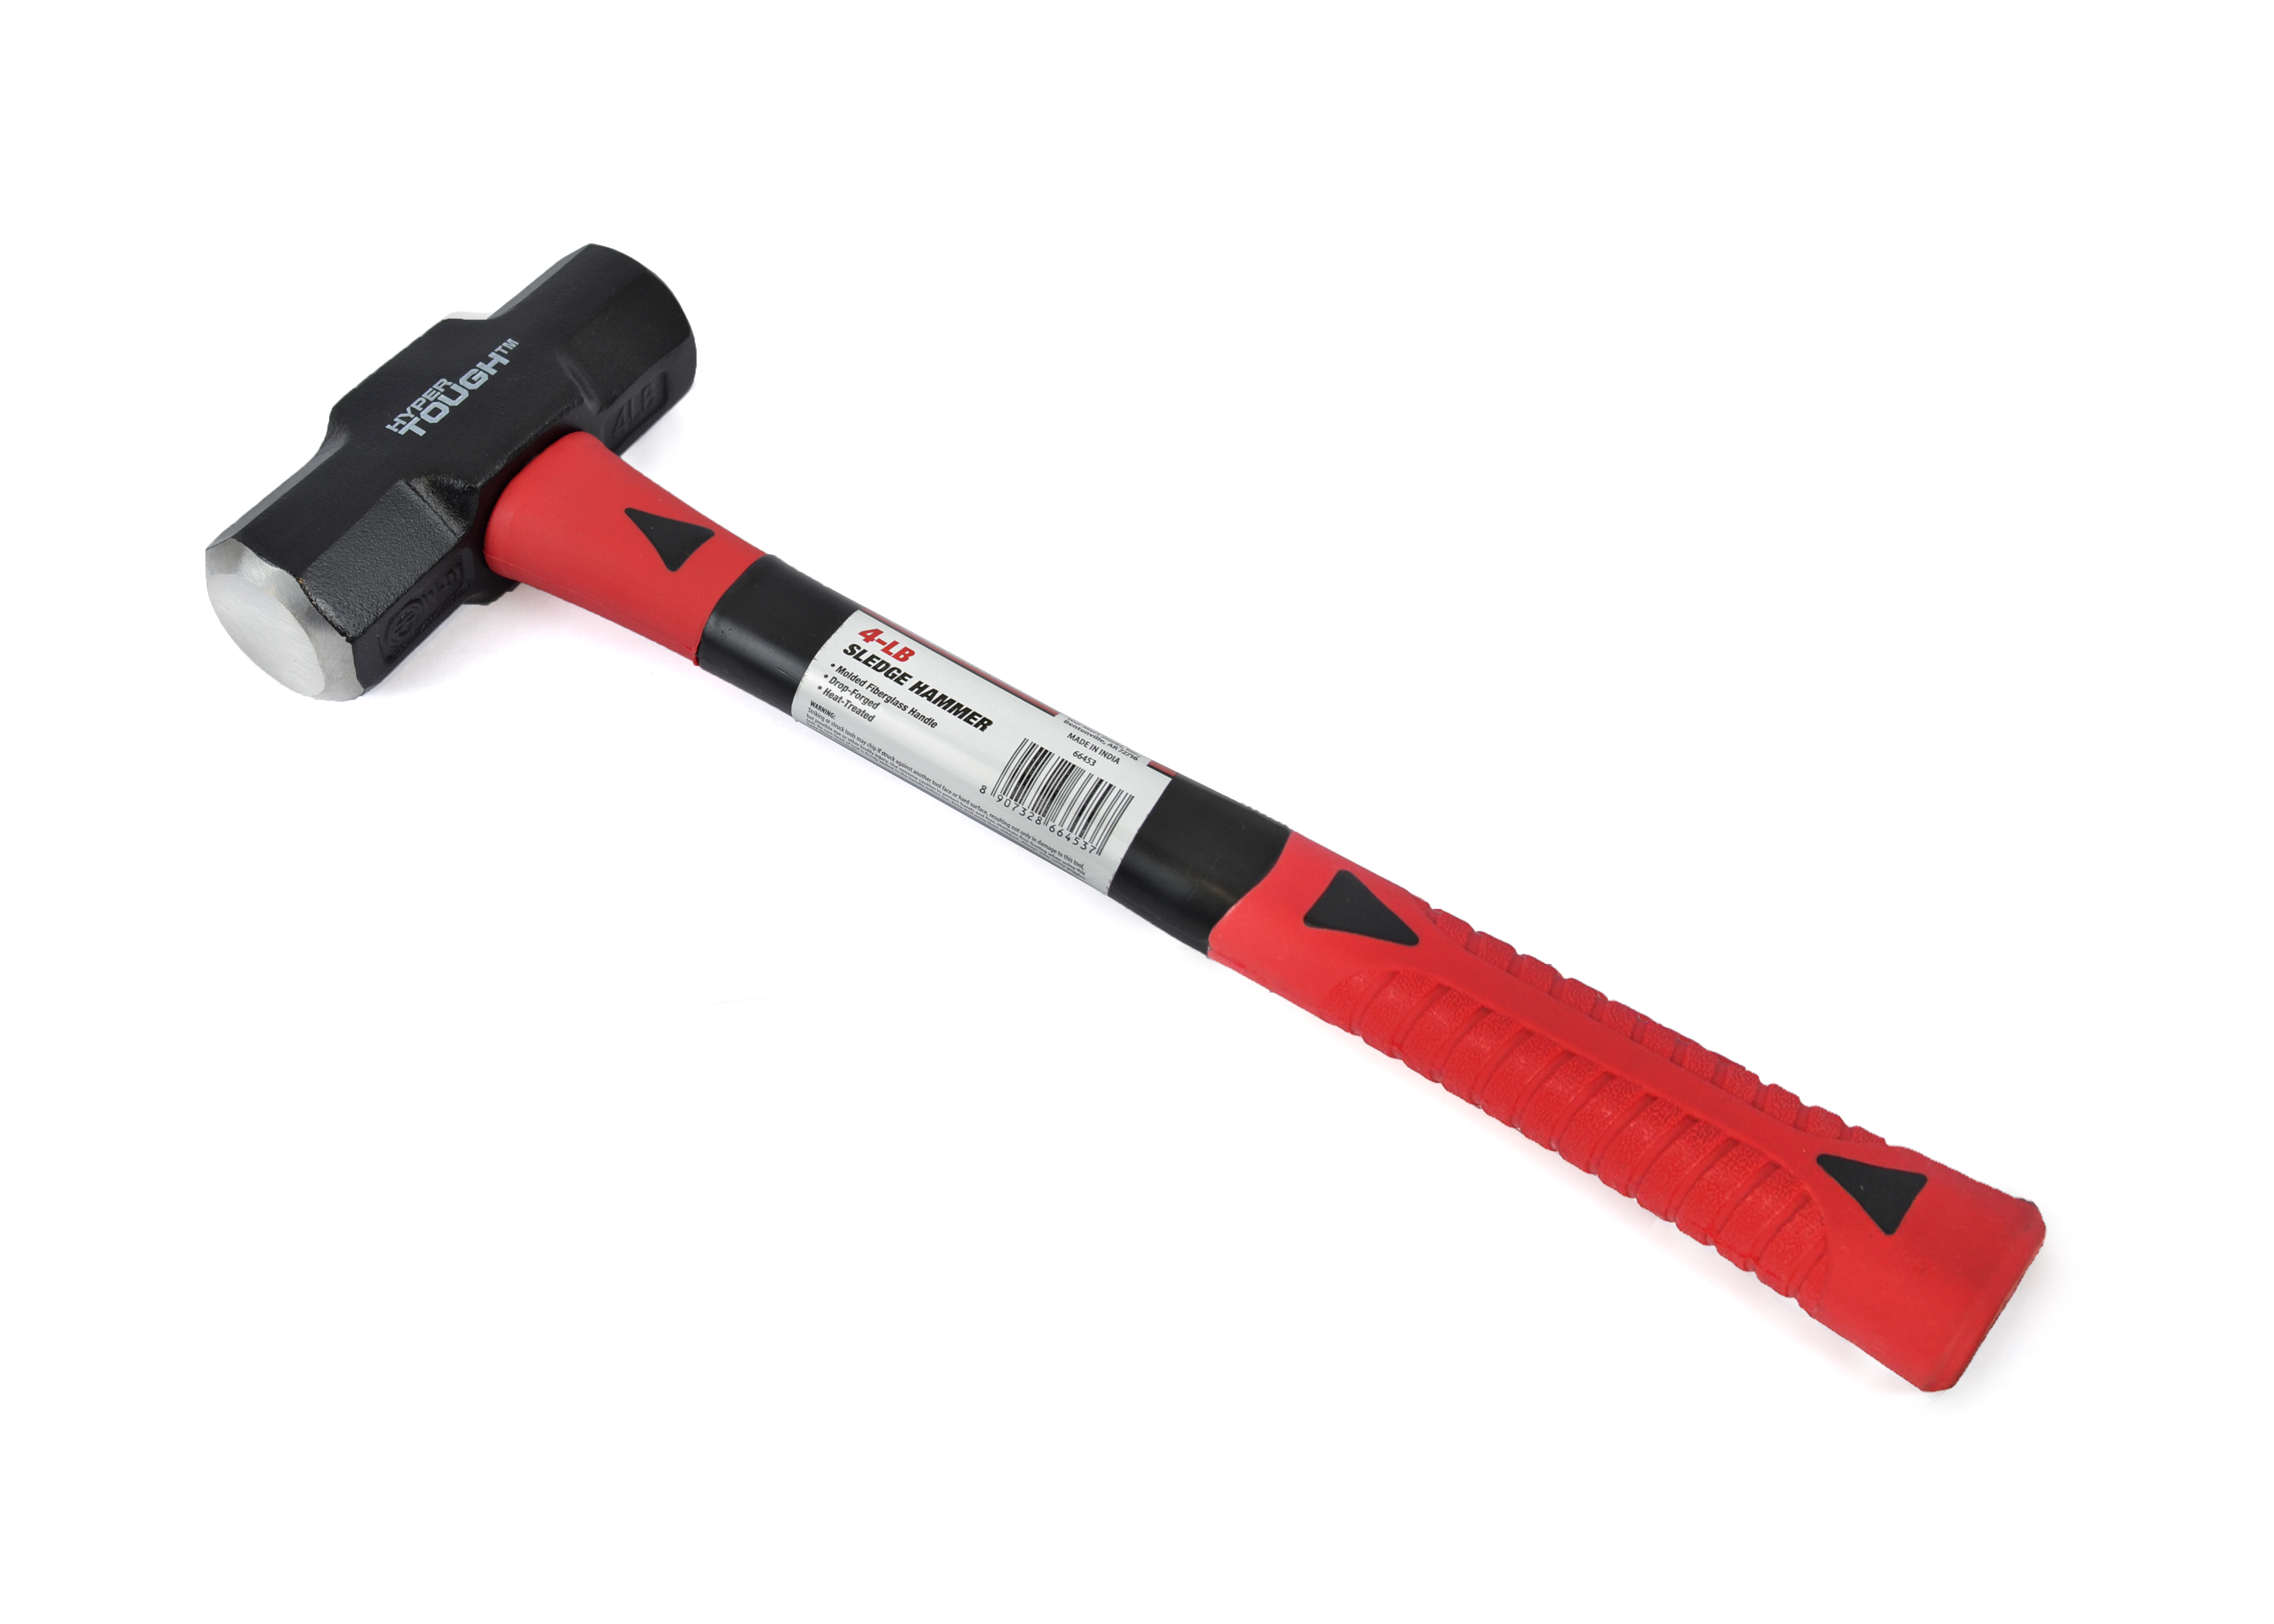 Hyper Tough 4 lb Sledge Hammer, Fiberglass Handle - image 4 of 6